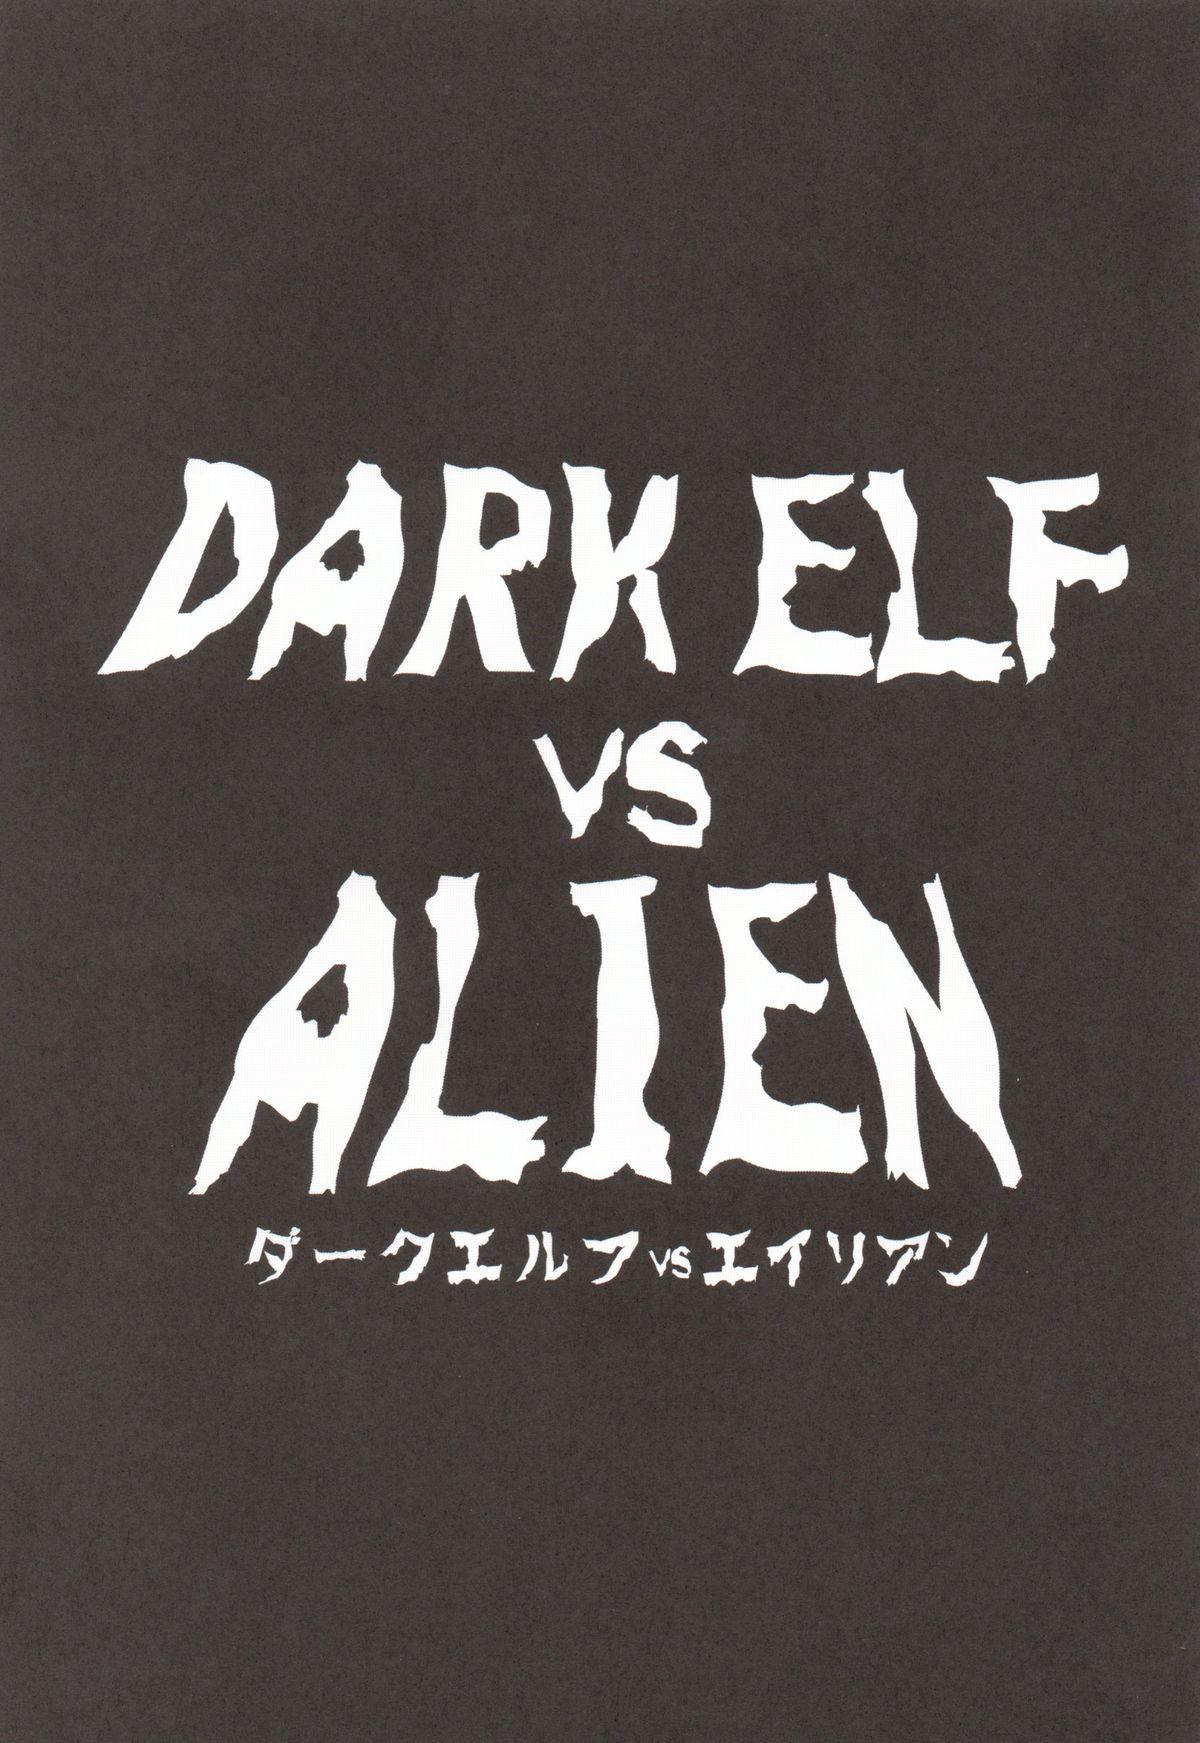 Made DARK ELF vs ALIEN Calle - Page 2